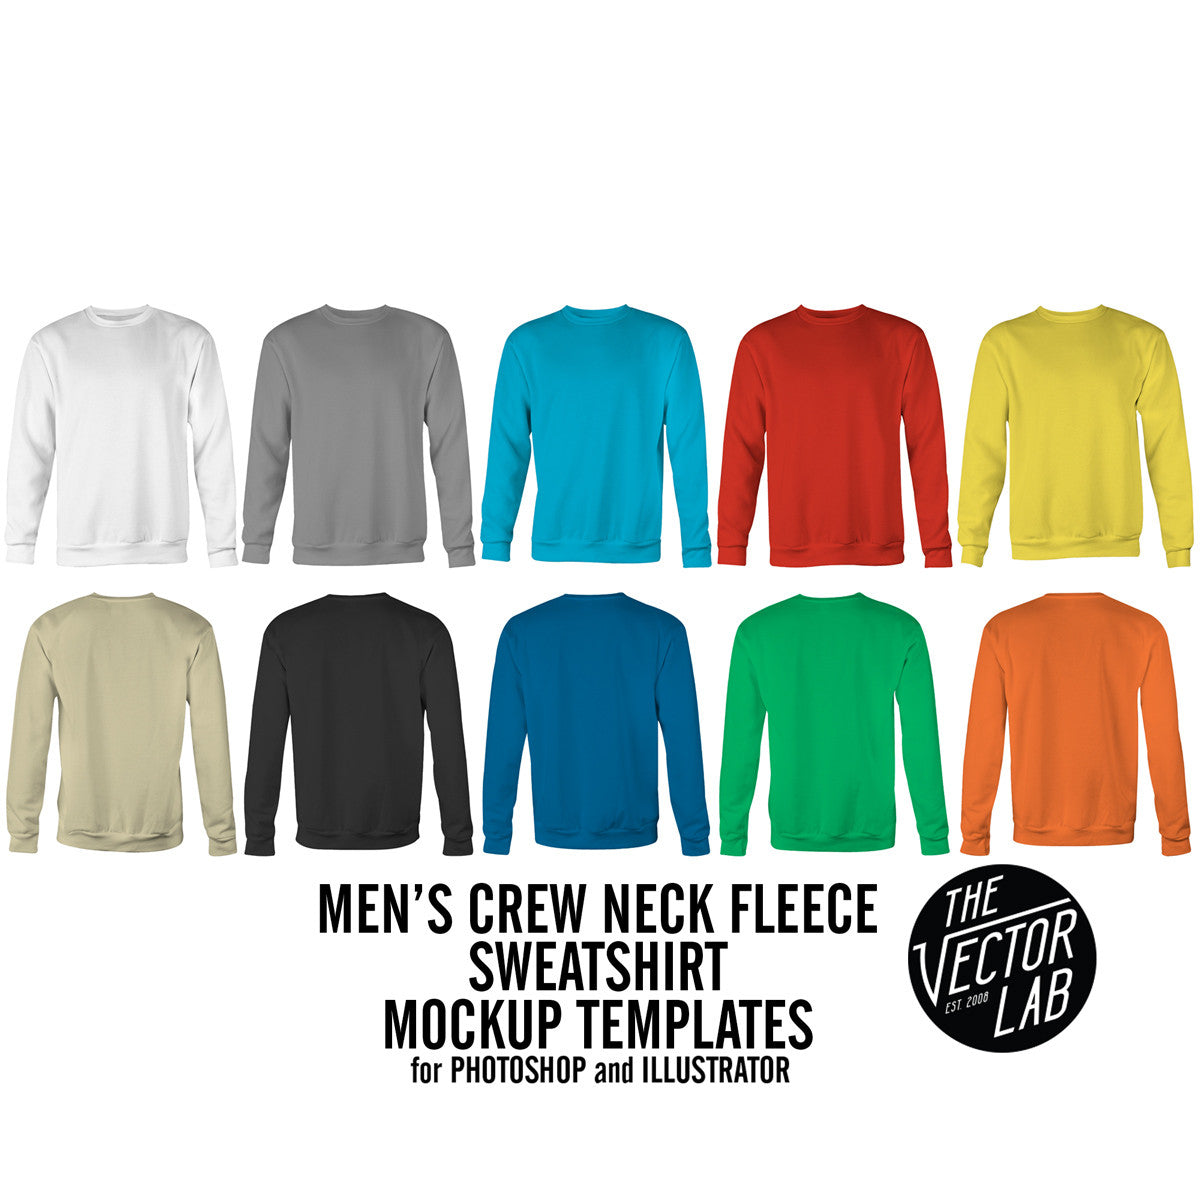 Download Men's Crew Neck Sweatshirt Mockup Templates - TheVectorLab